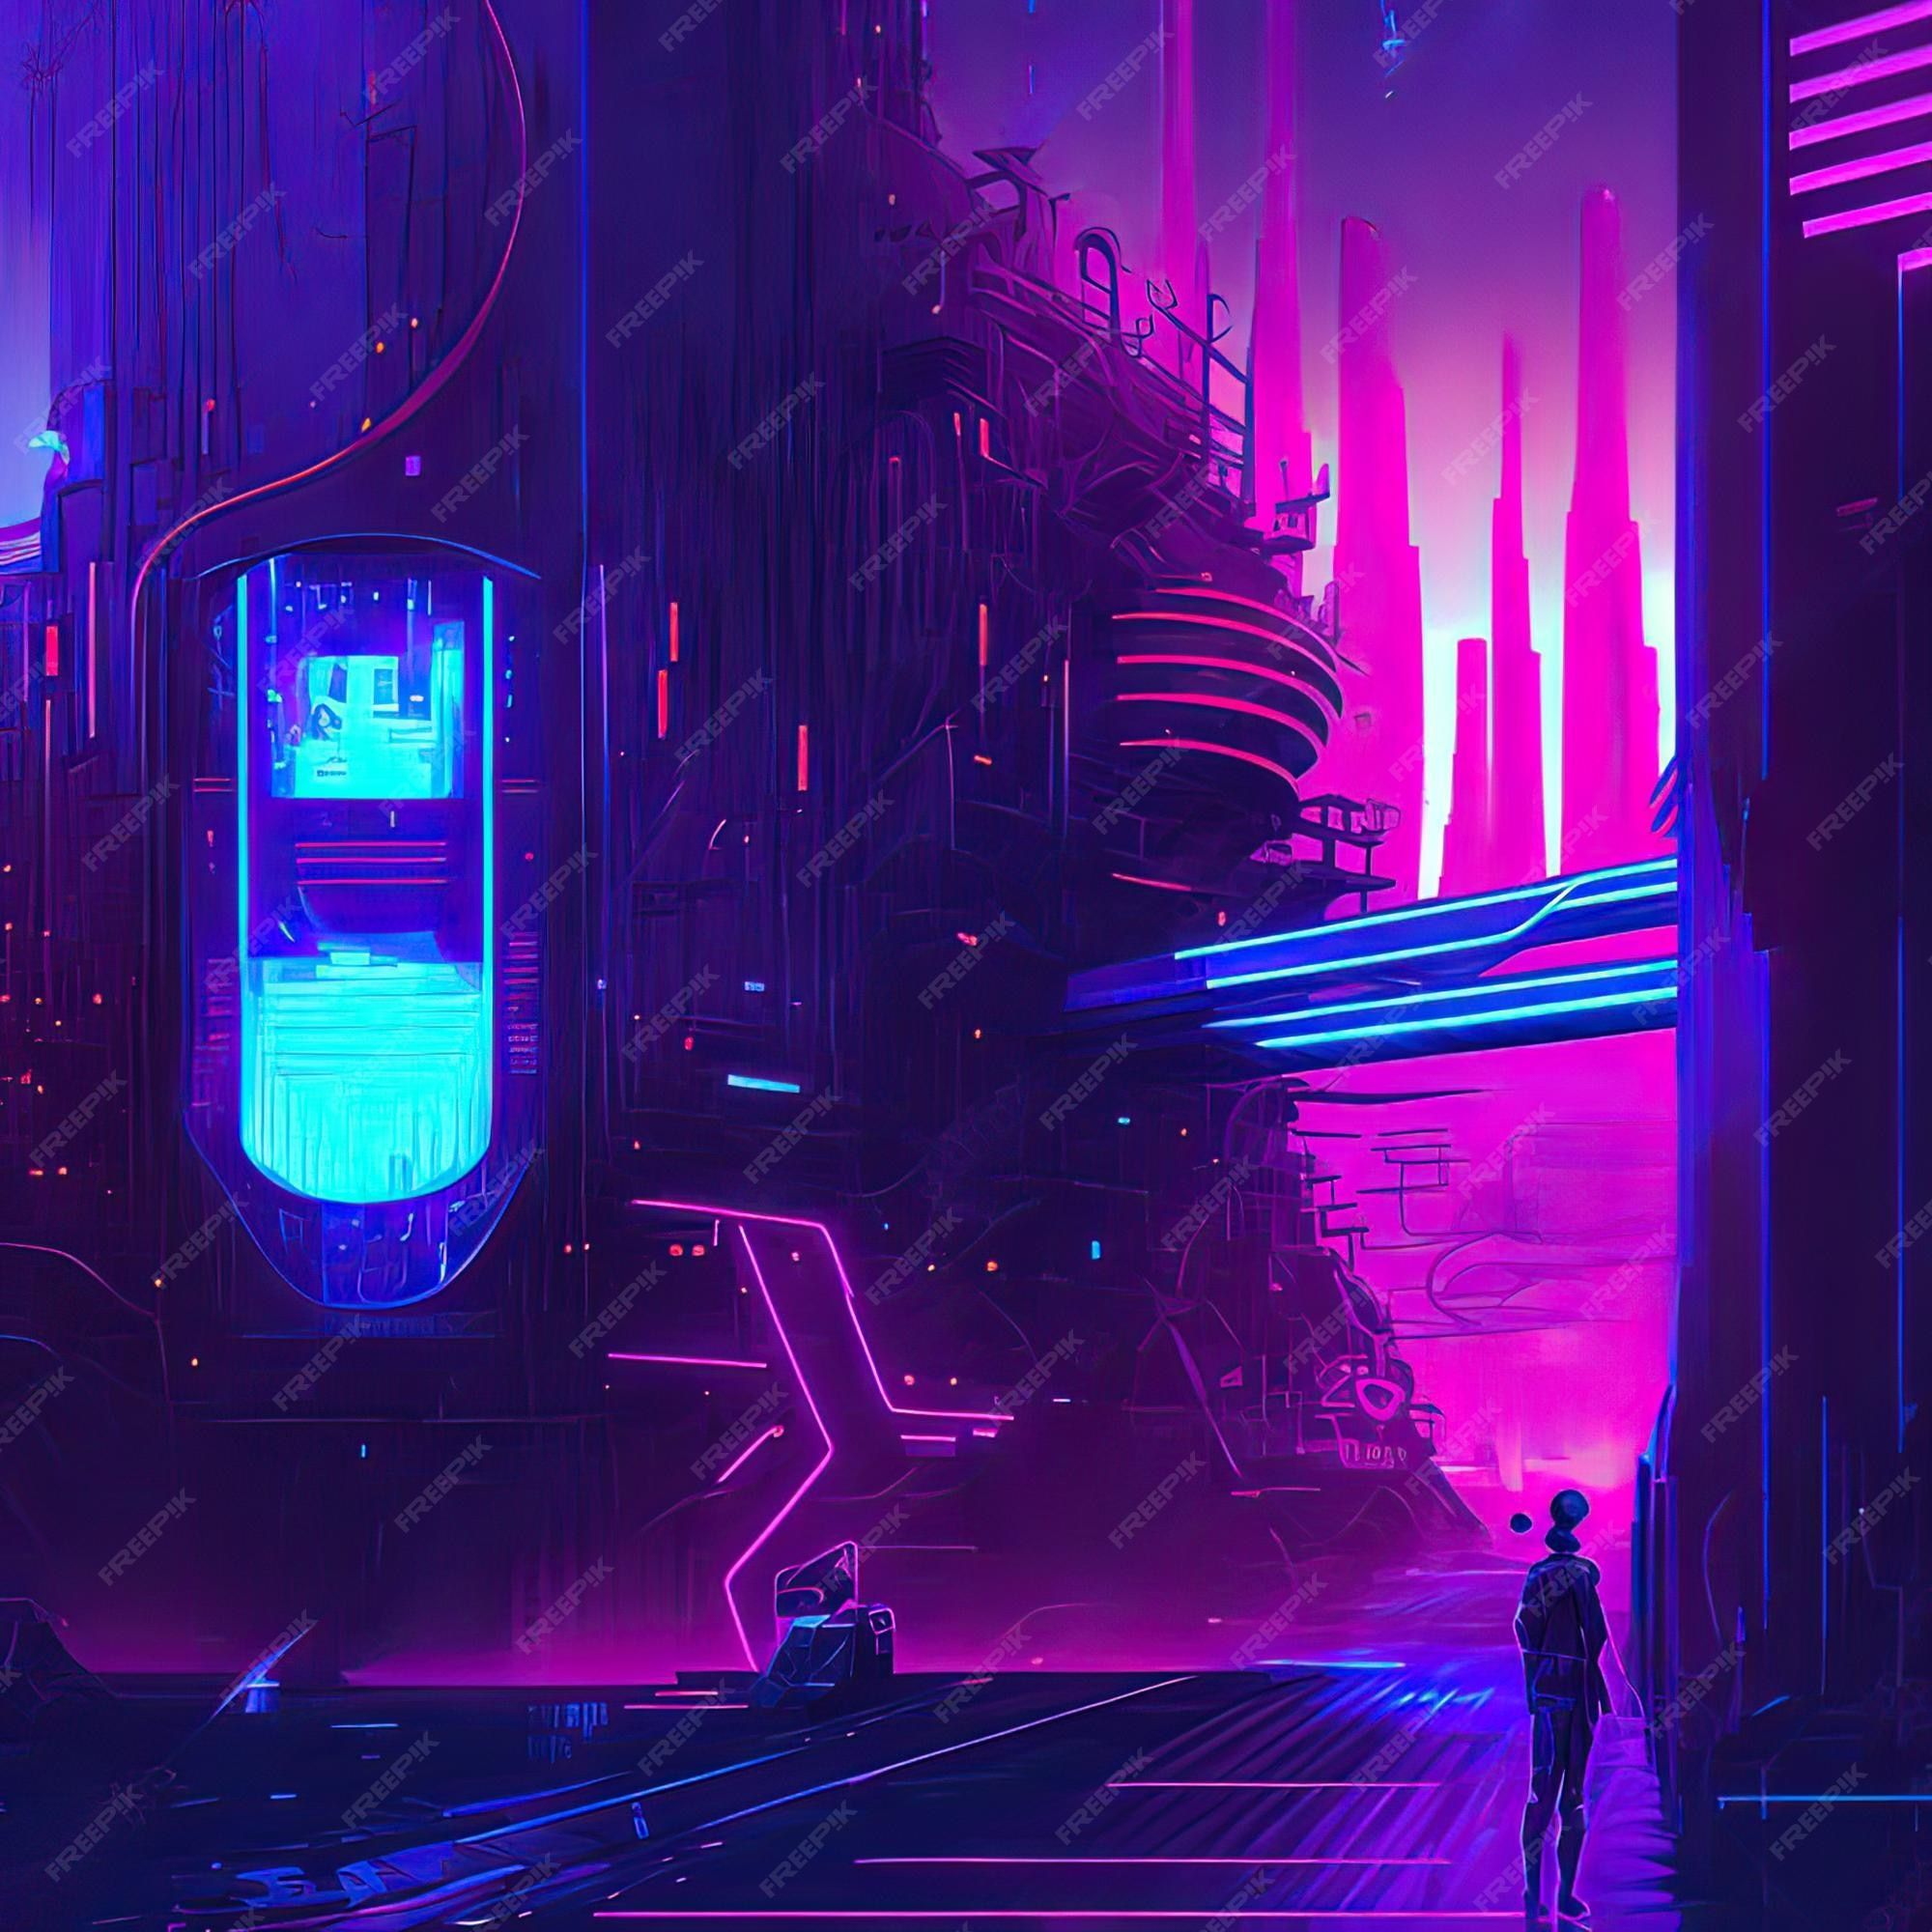 A man in a suit and hat walks down a neon-lit street in a cyberpunk city. - Cyberpunk 2077